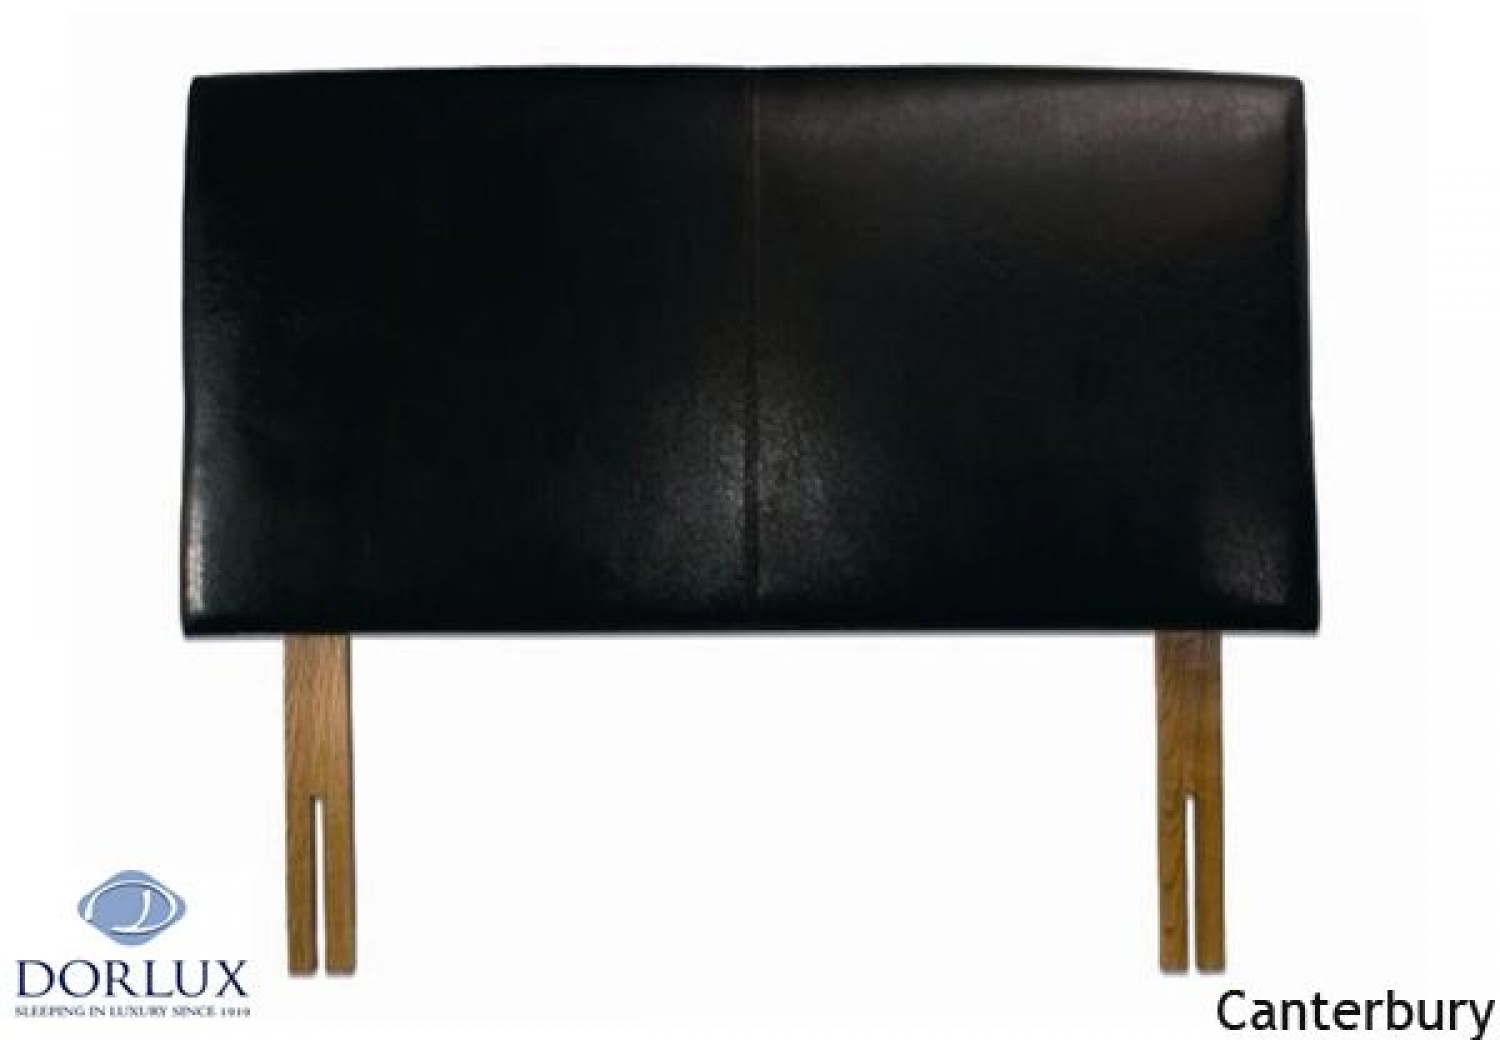 dorlux cambridge brown leather headboard image